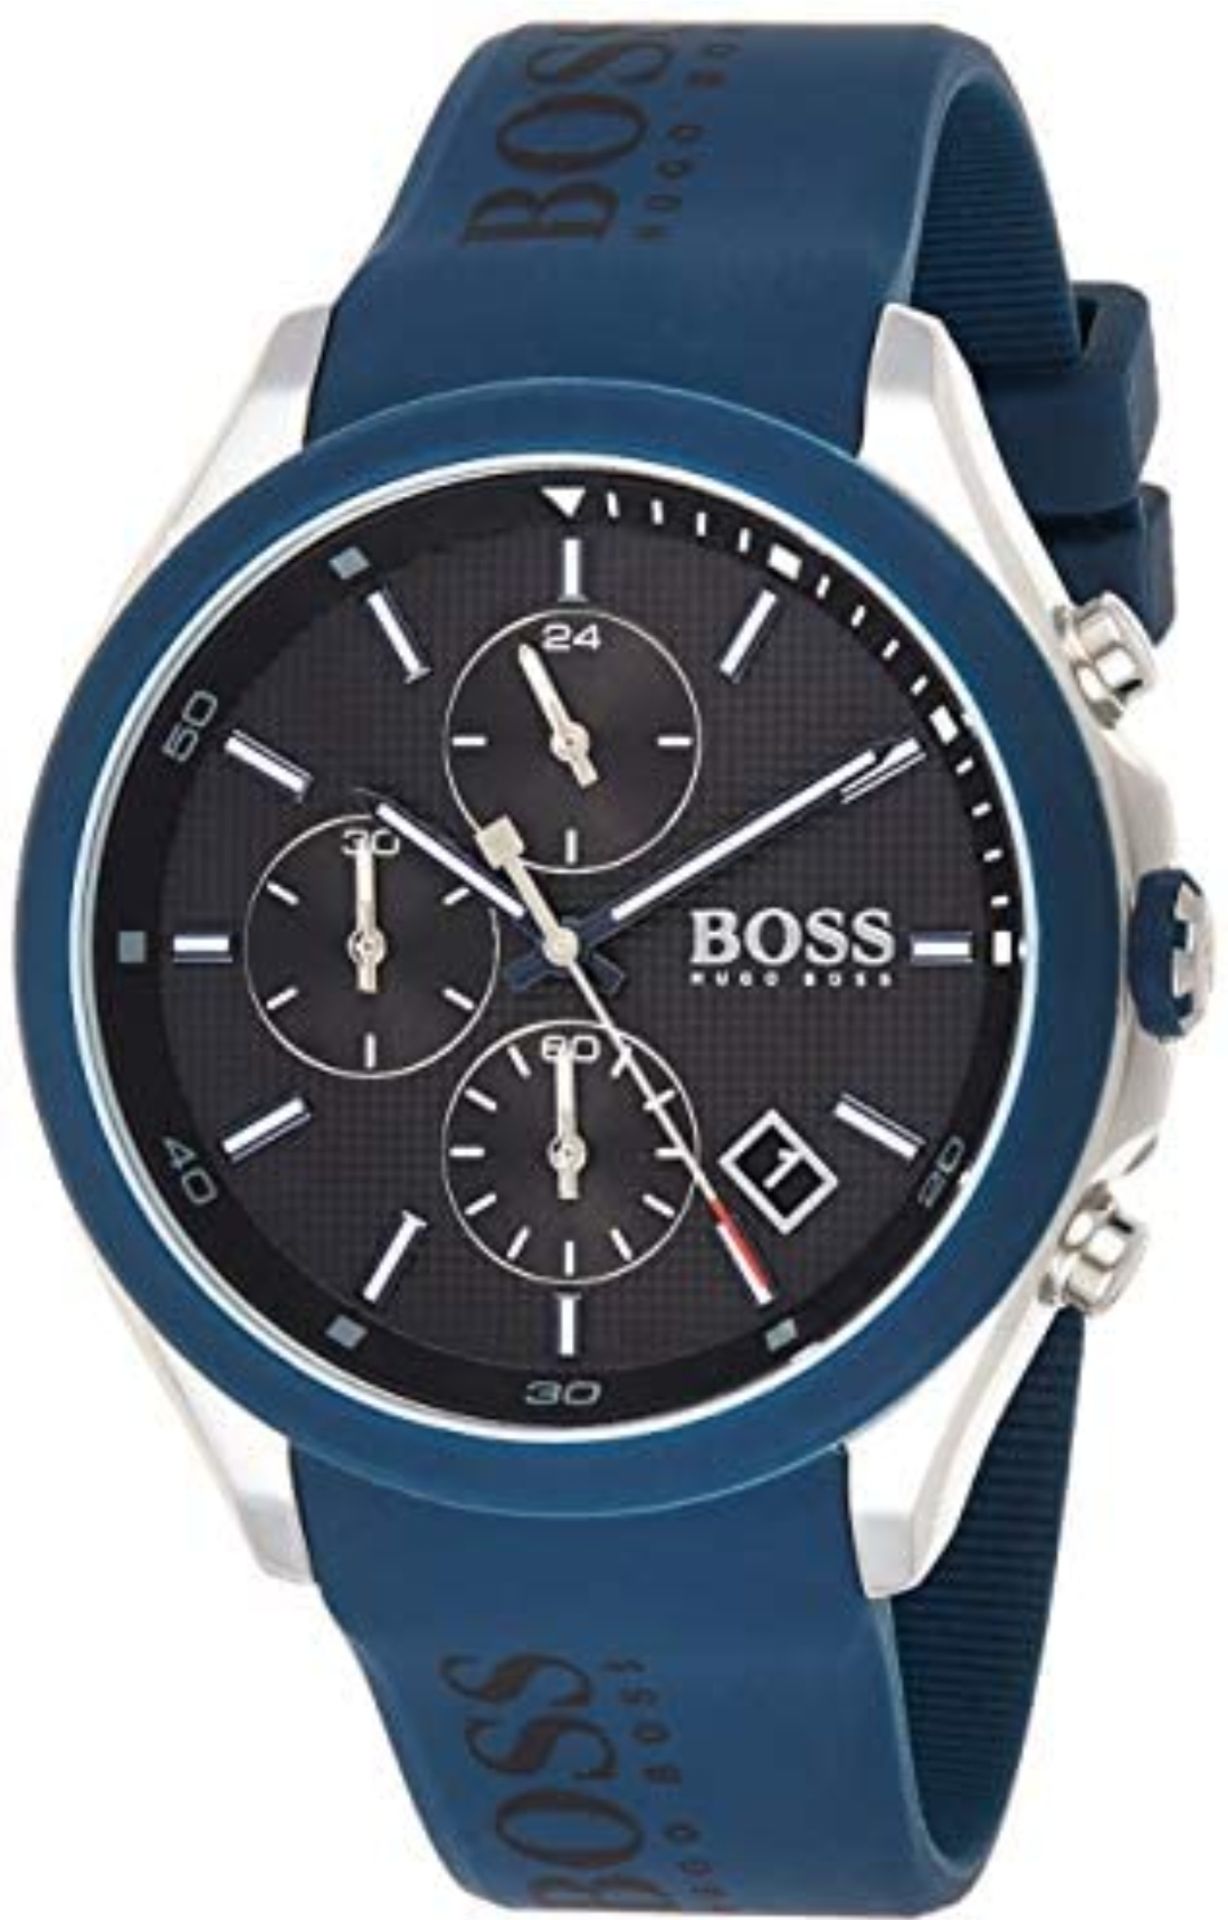 Hugo Boss 1513717 Men's Velocity Blue Rubber Strap Quartz Chronograph Watch - Image 4 of 11